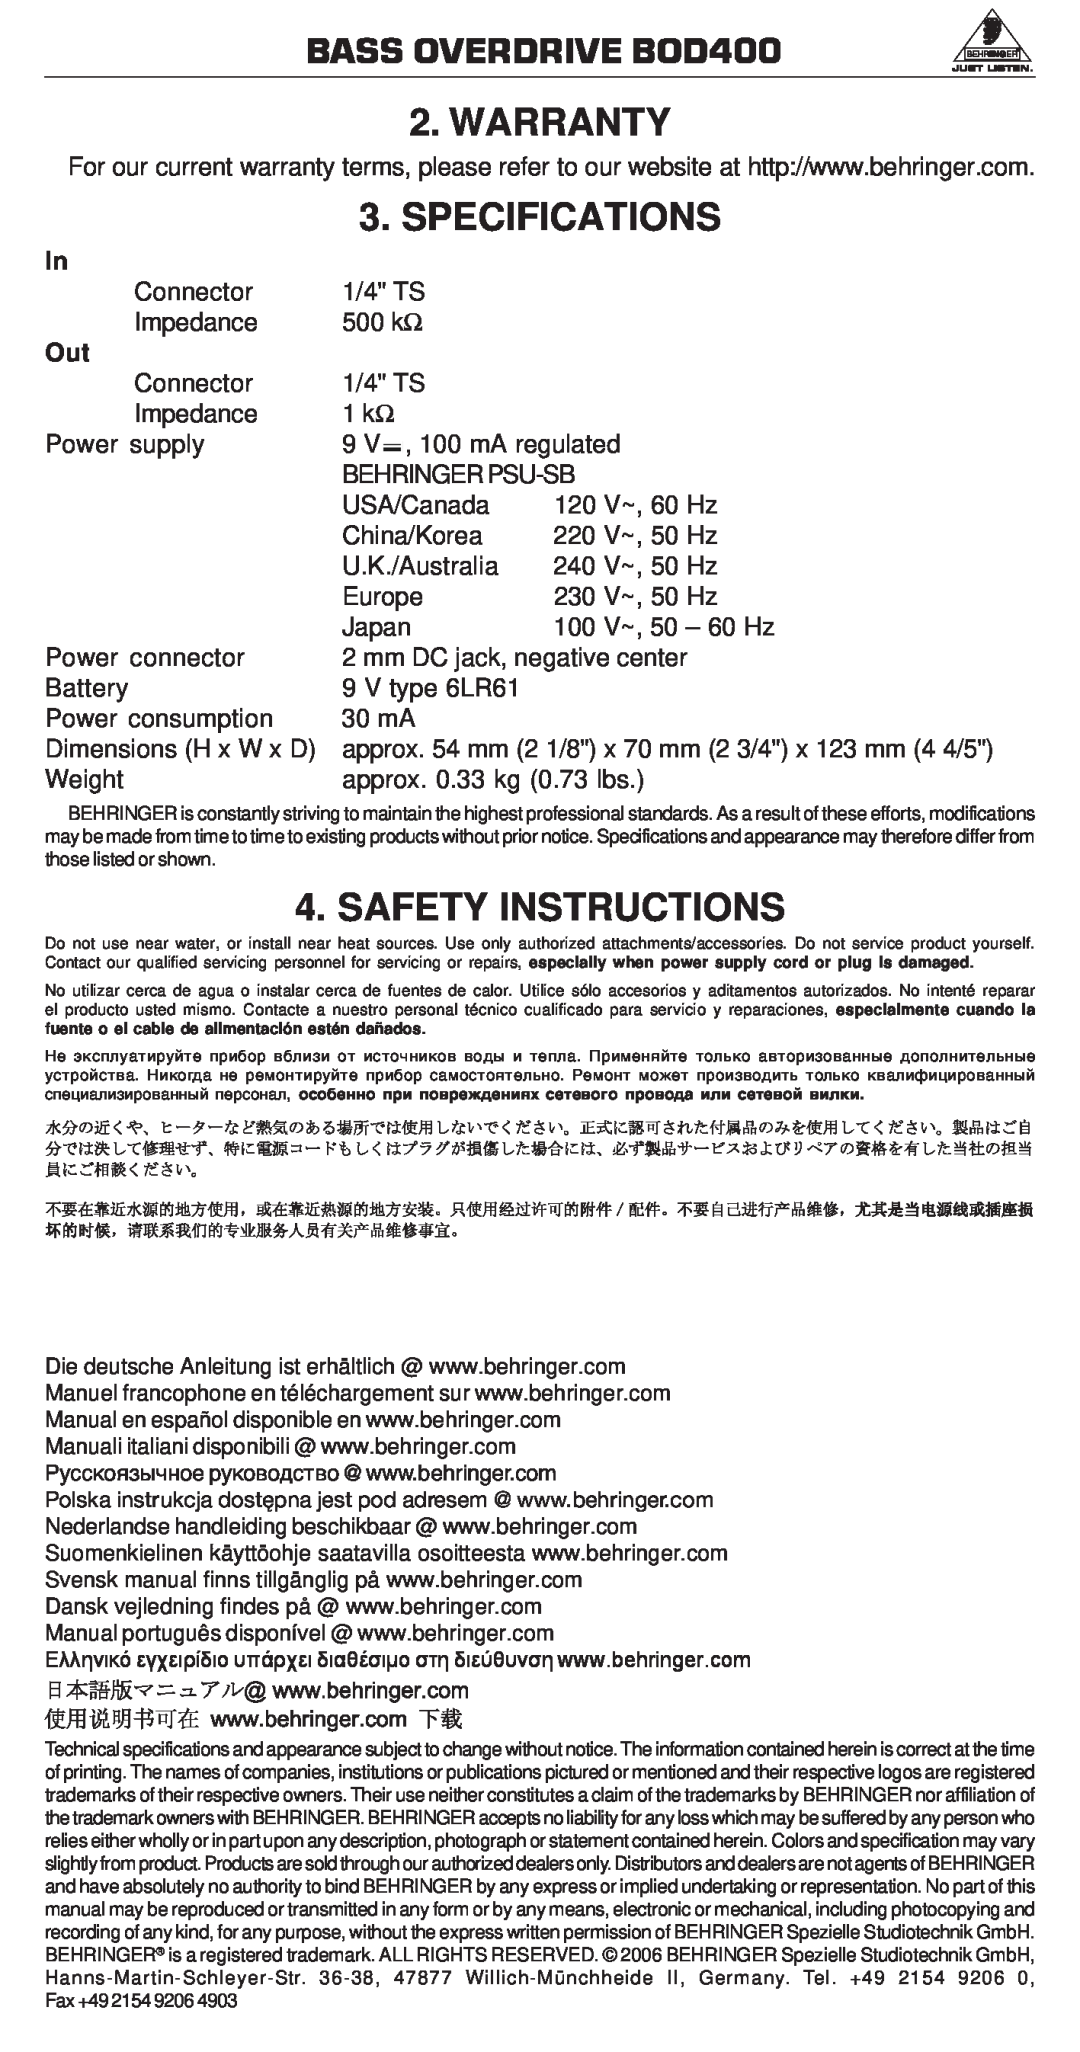 Behringer BEHRINGERPSU-SB manual BASS OVERDRIVE BOD400 2. WARRANTY, Specifications, Safety Instructions 